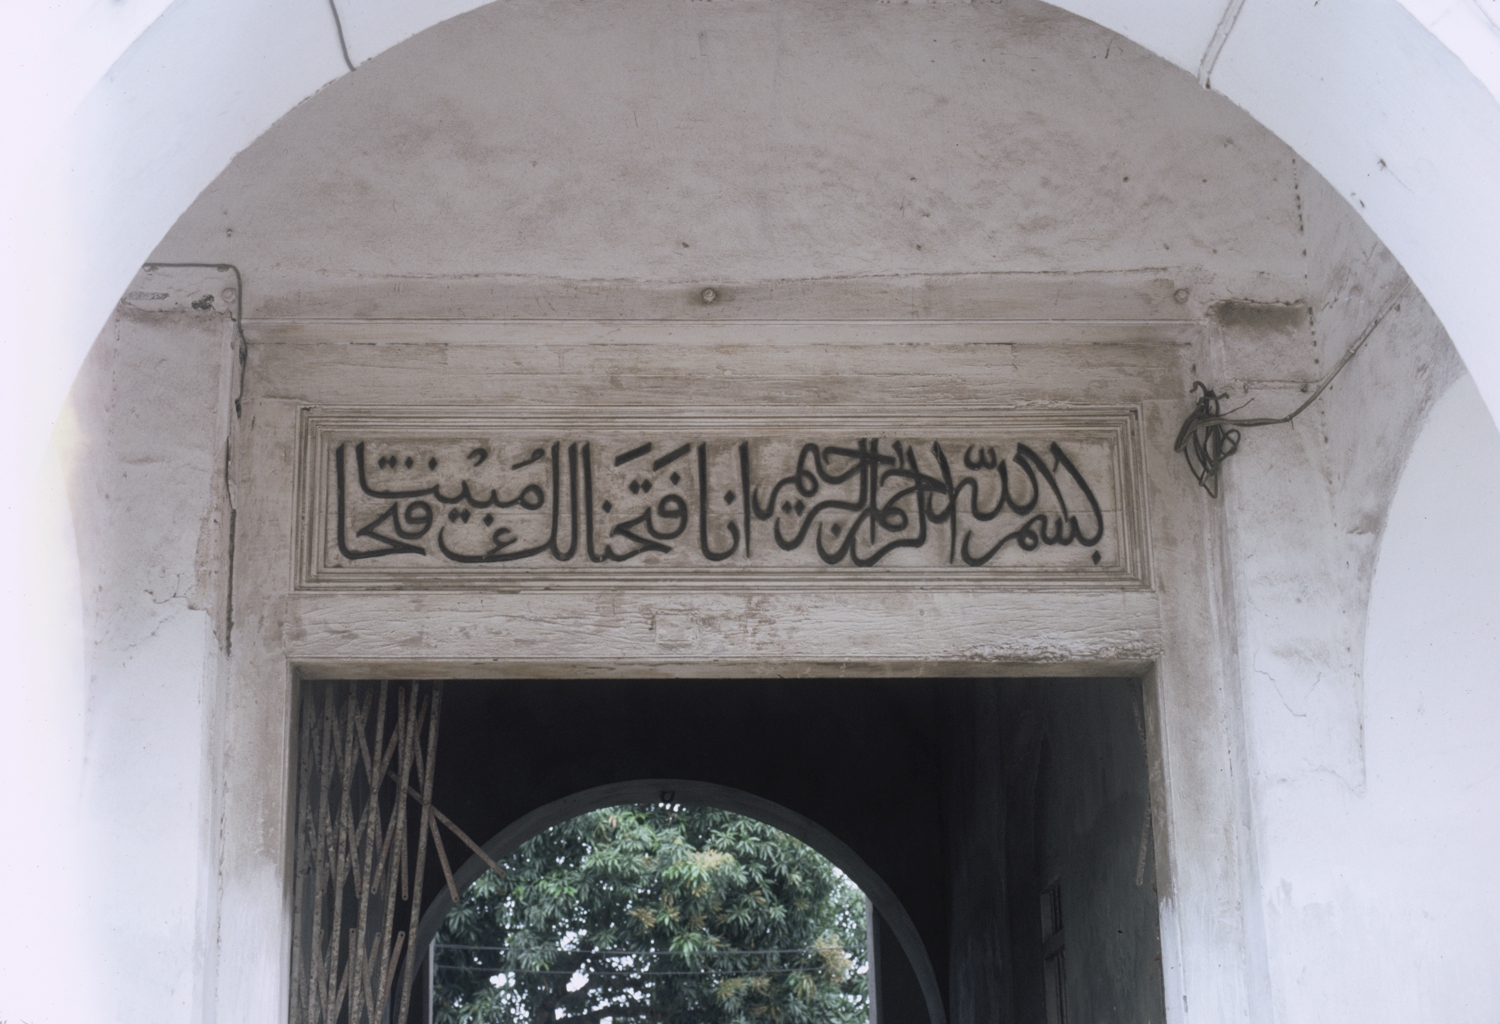 Detail of Quranic inscription above entrance portal